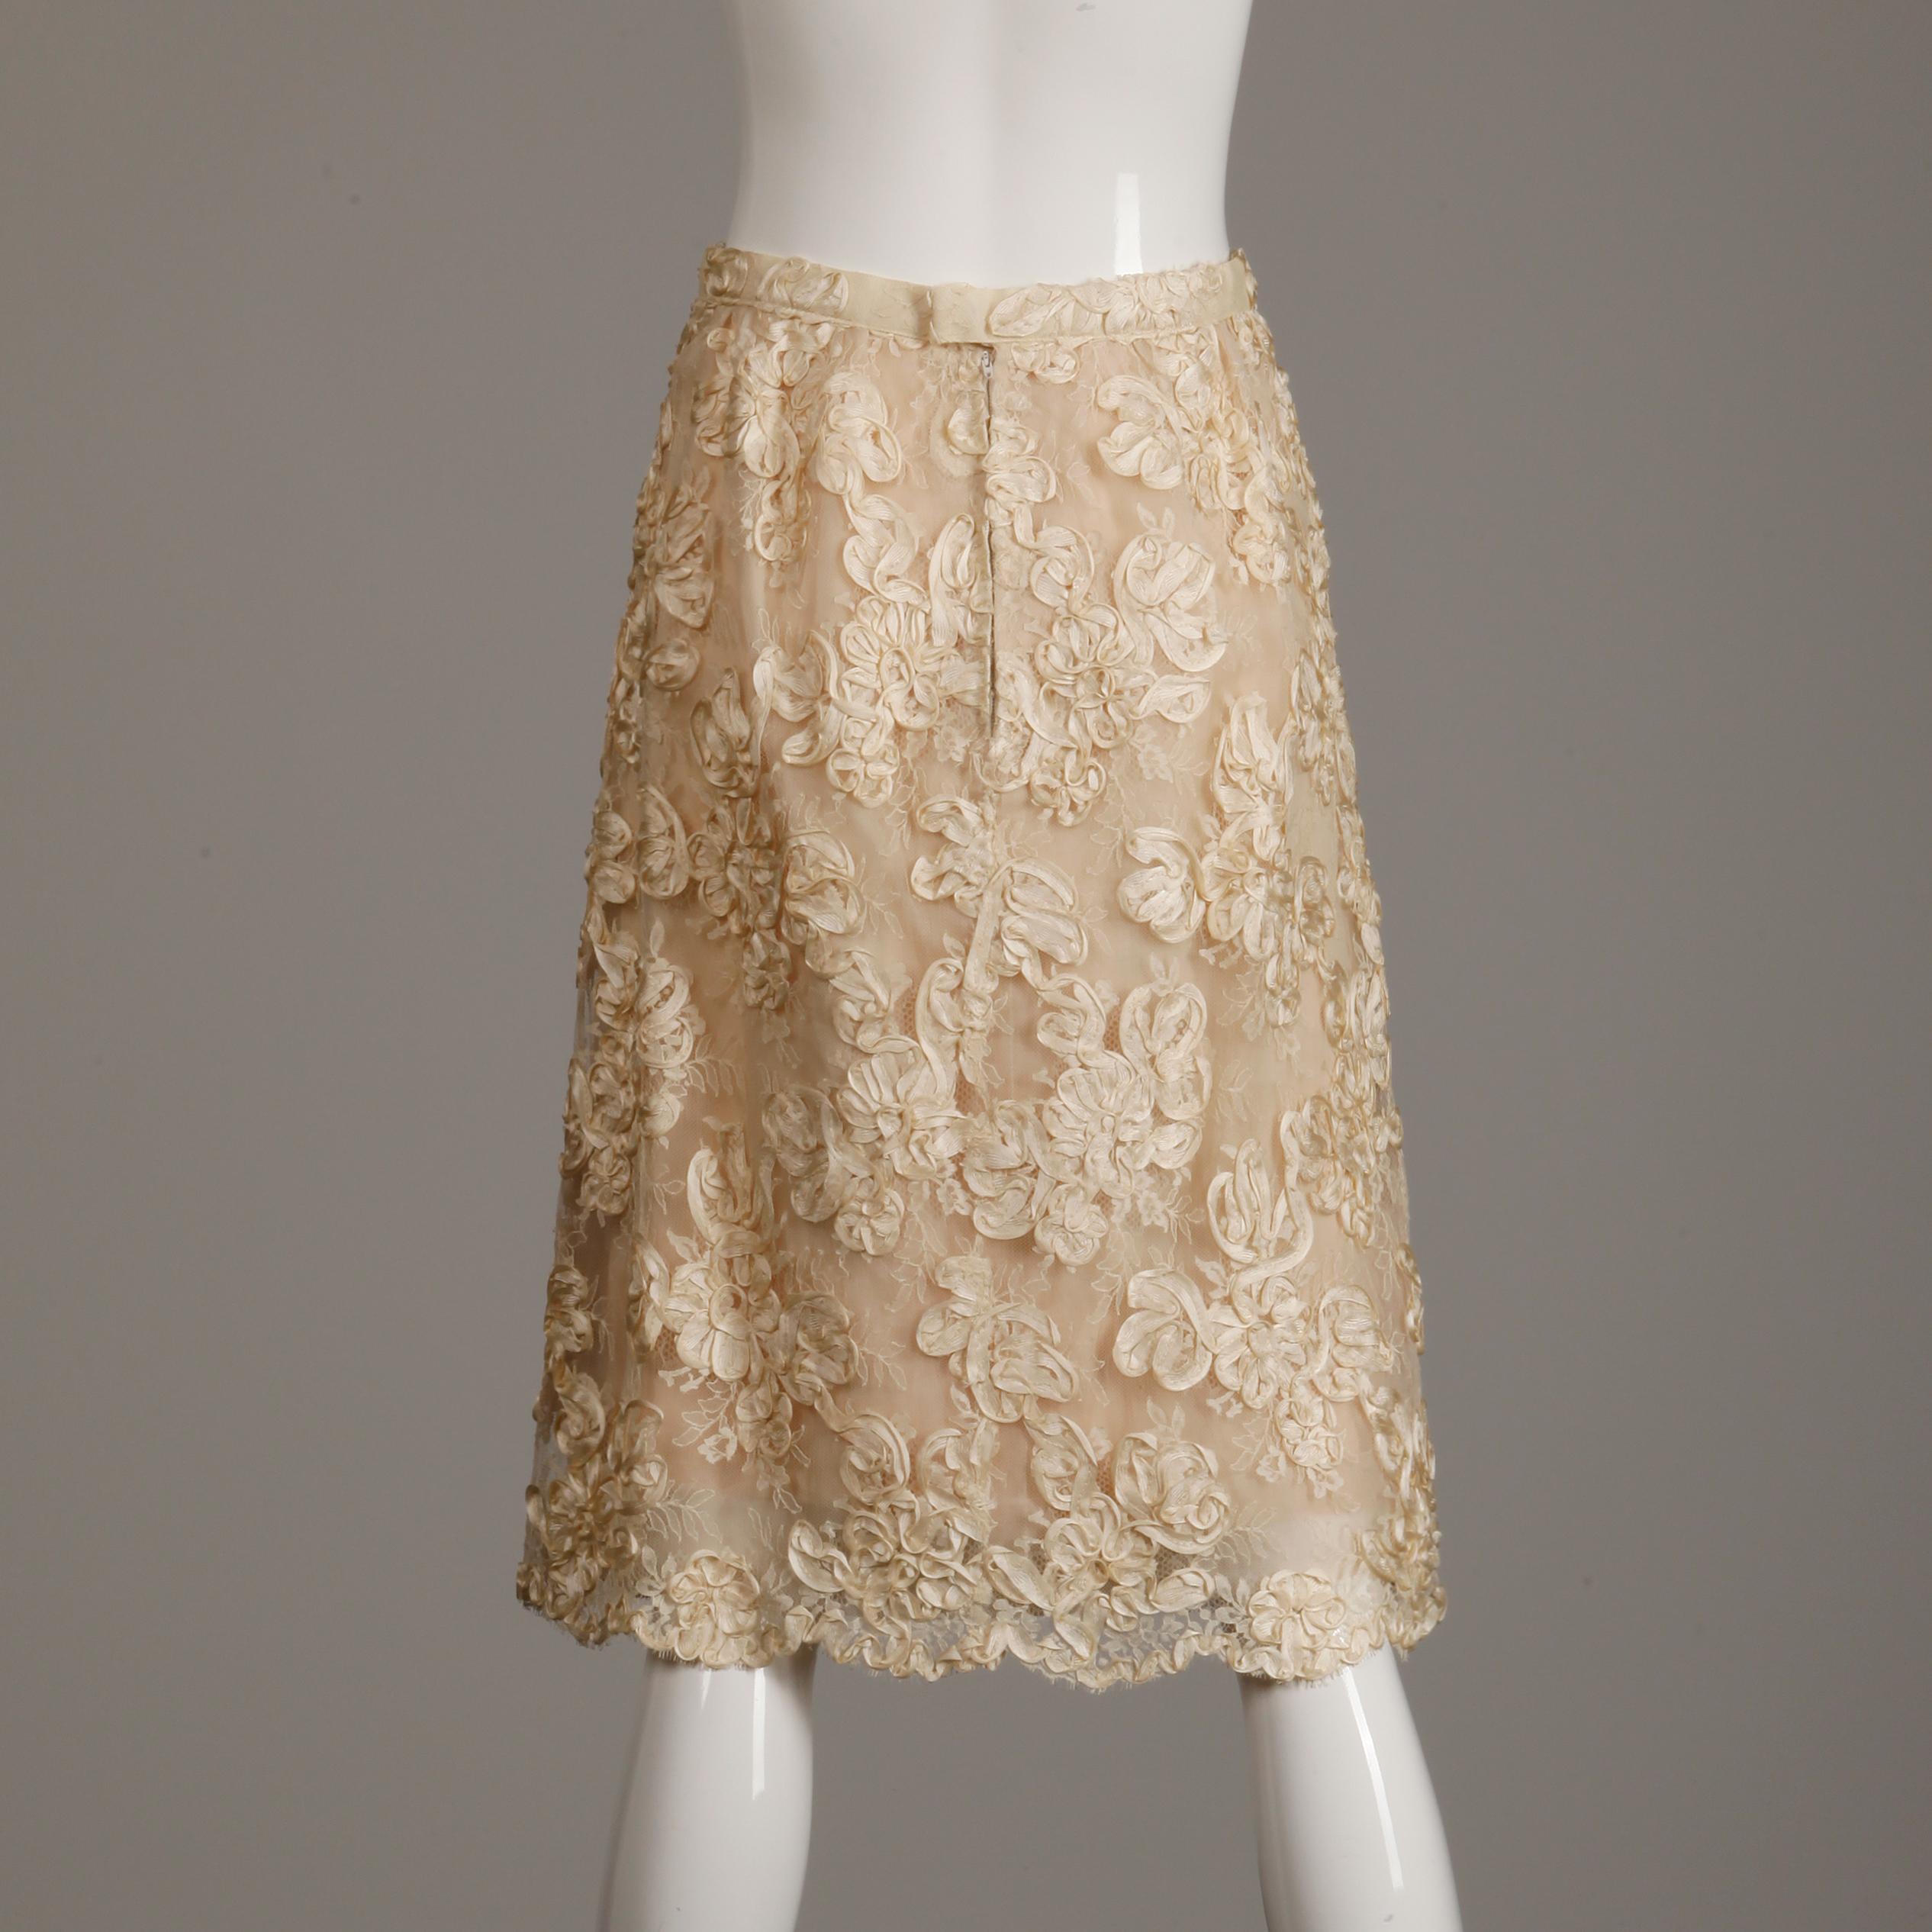 1960s Vintage Cream/ Off White Silk Soutache Lace Top/ Skirt Ensemble or Dress For Sale 2